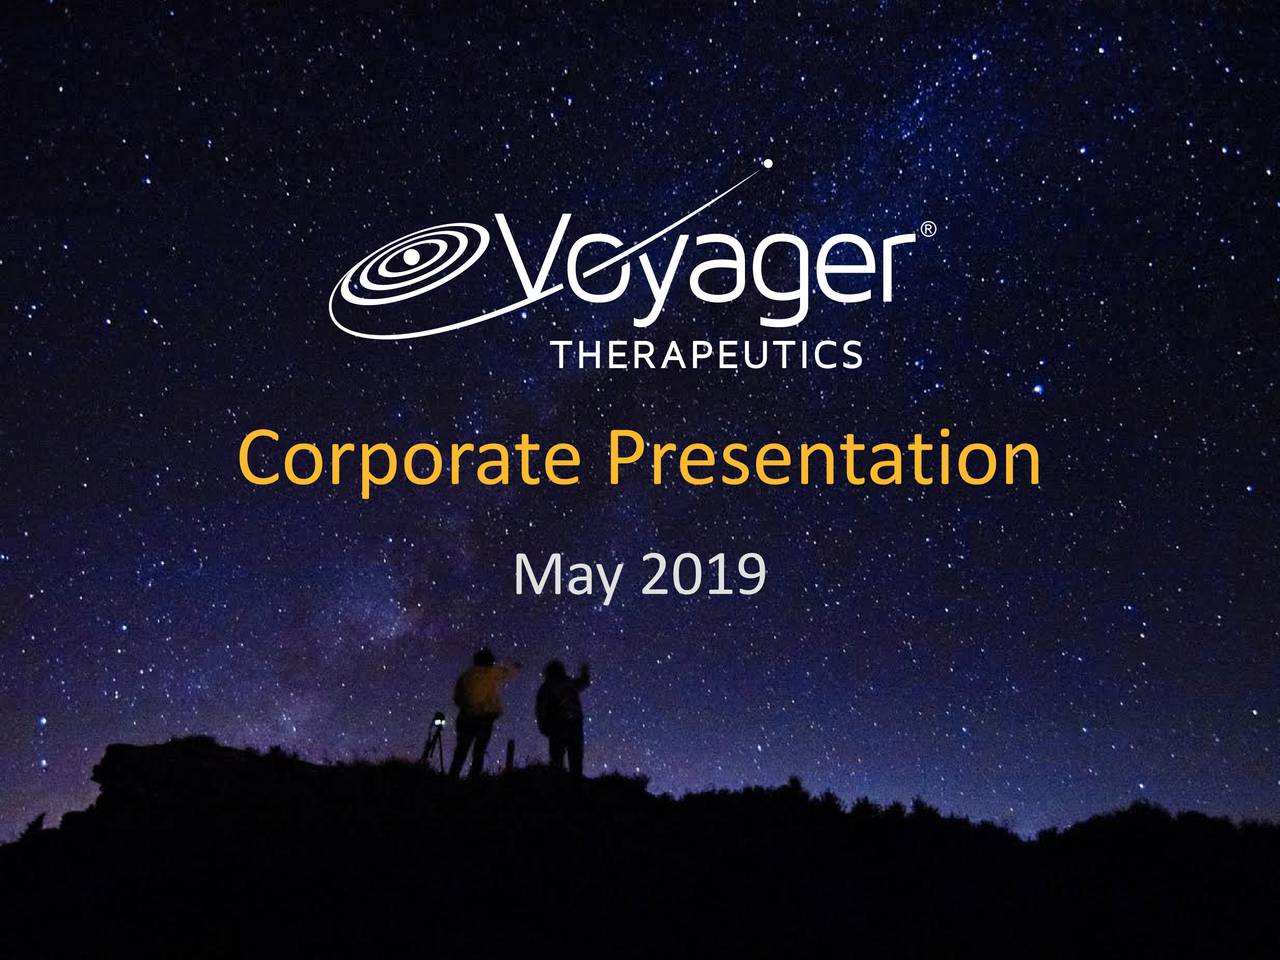 voyager therapeutics inc investor relations